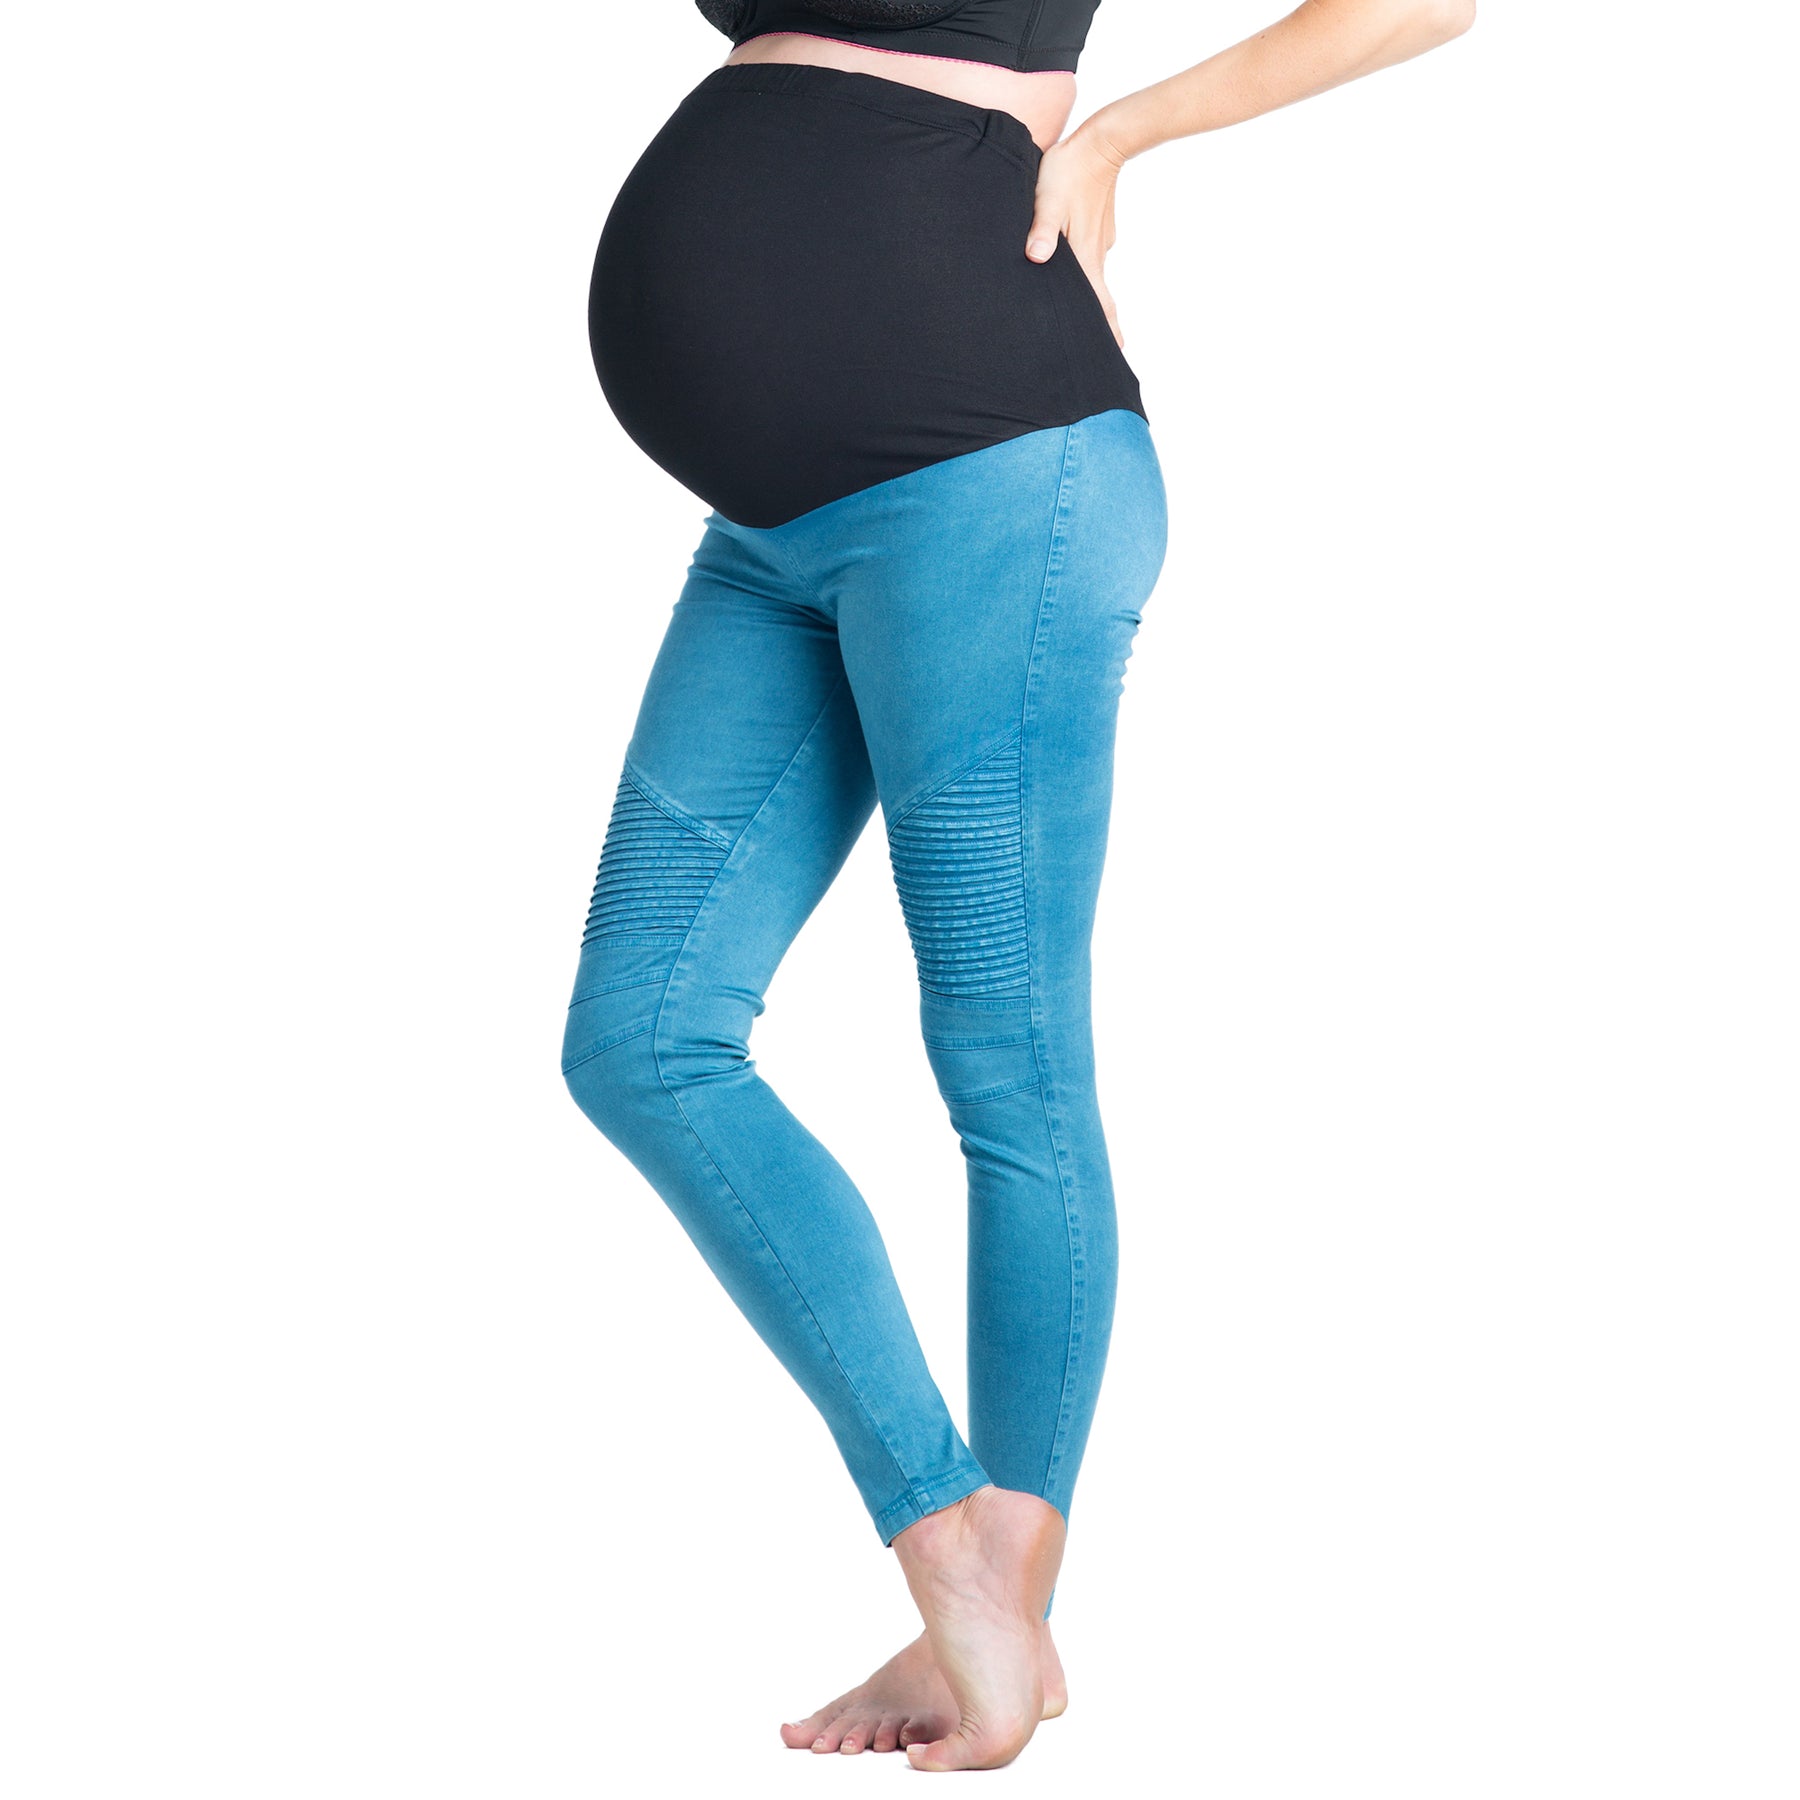 Maternity & Postpartum Leggings and Clothing – Preggo Leggings